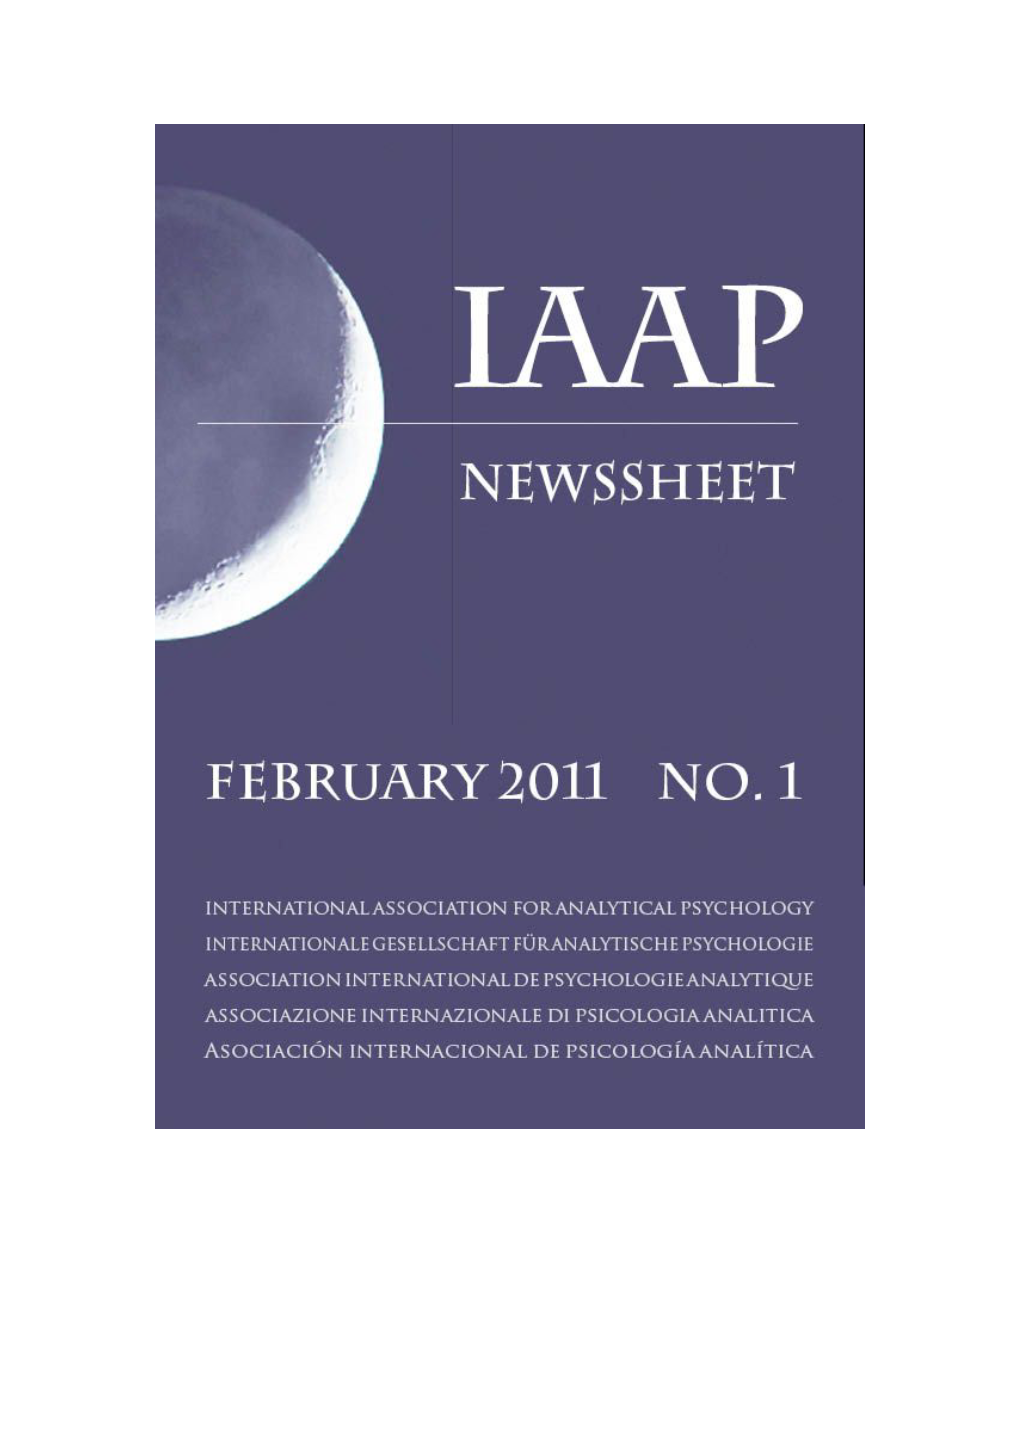 News Sheet No. 1 February 2011